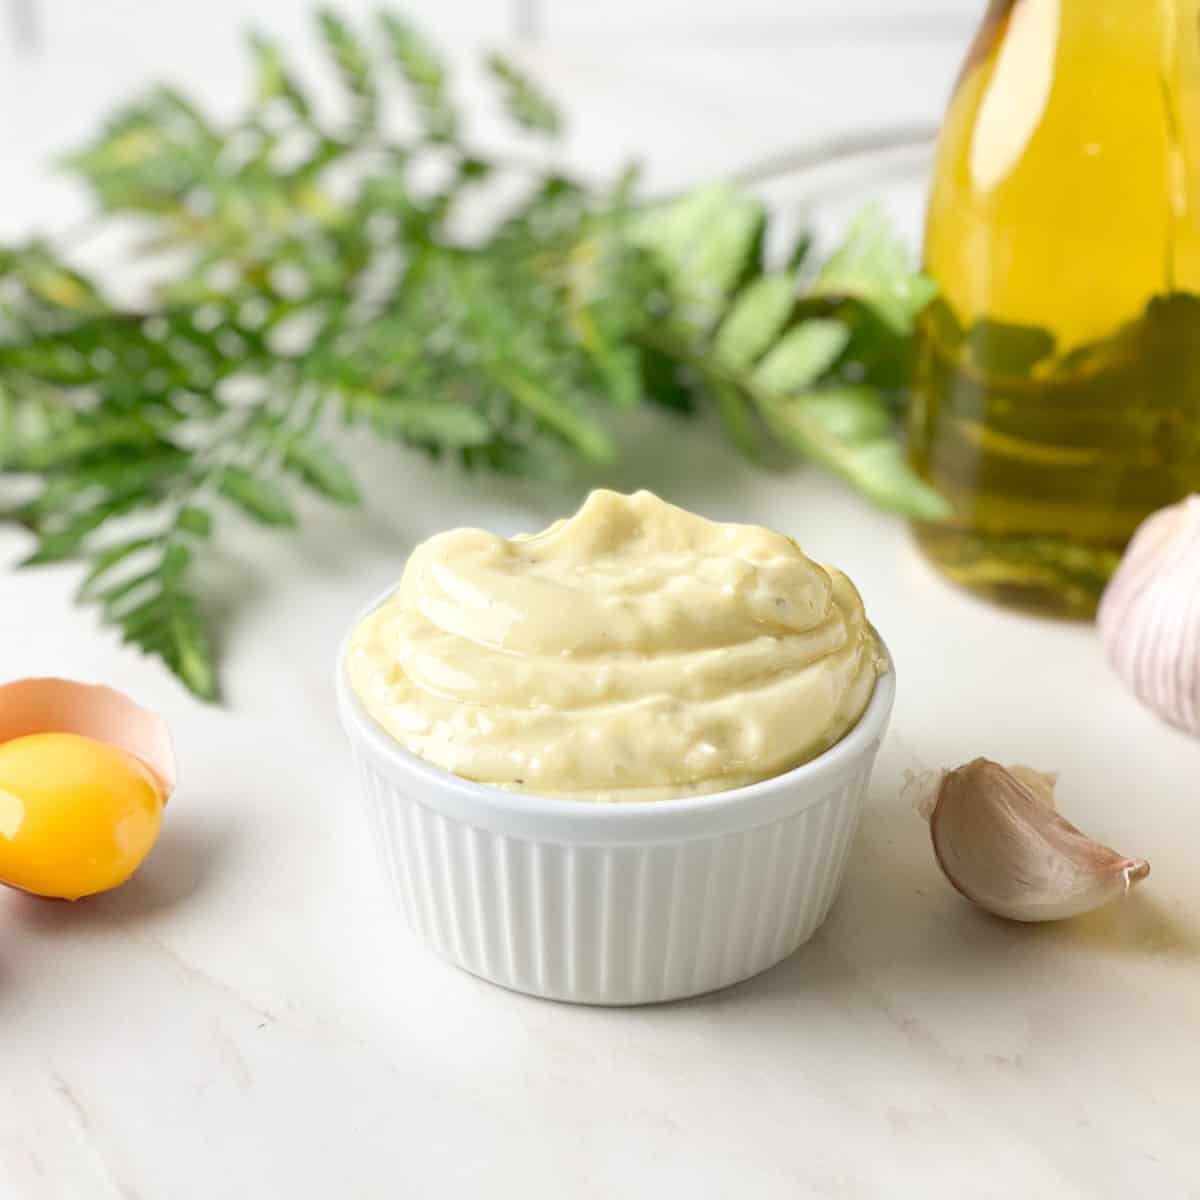 Homemade garlic mayonnaise in a white ramekin with greenery behind it and an egg yolk and a garlic clove beside it. e